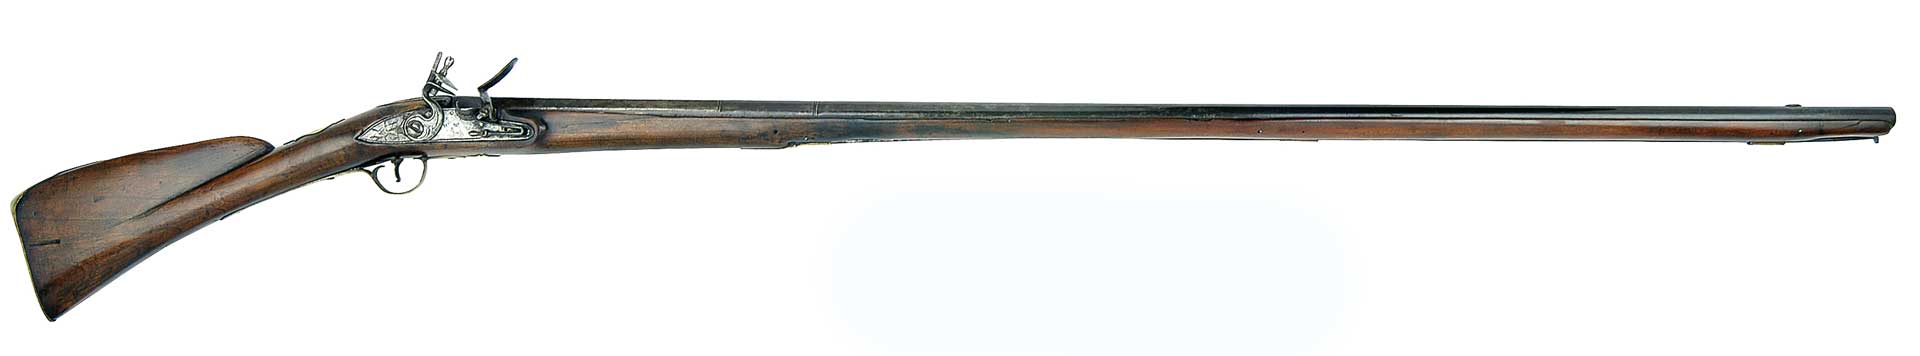 right side colonial era gun brown wood steel